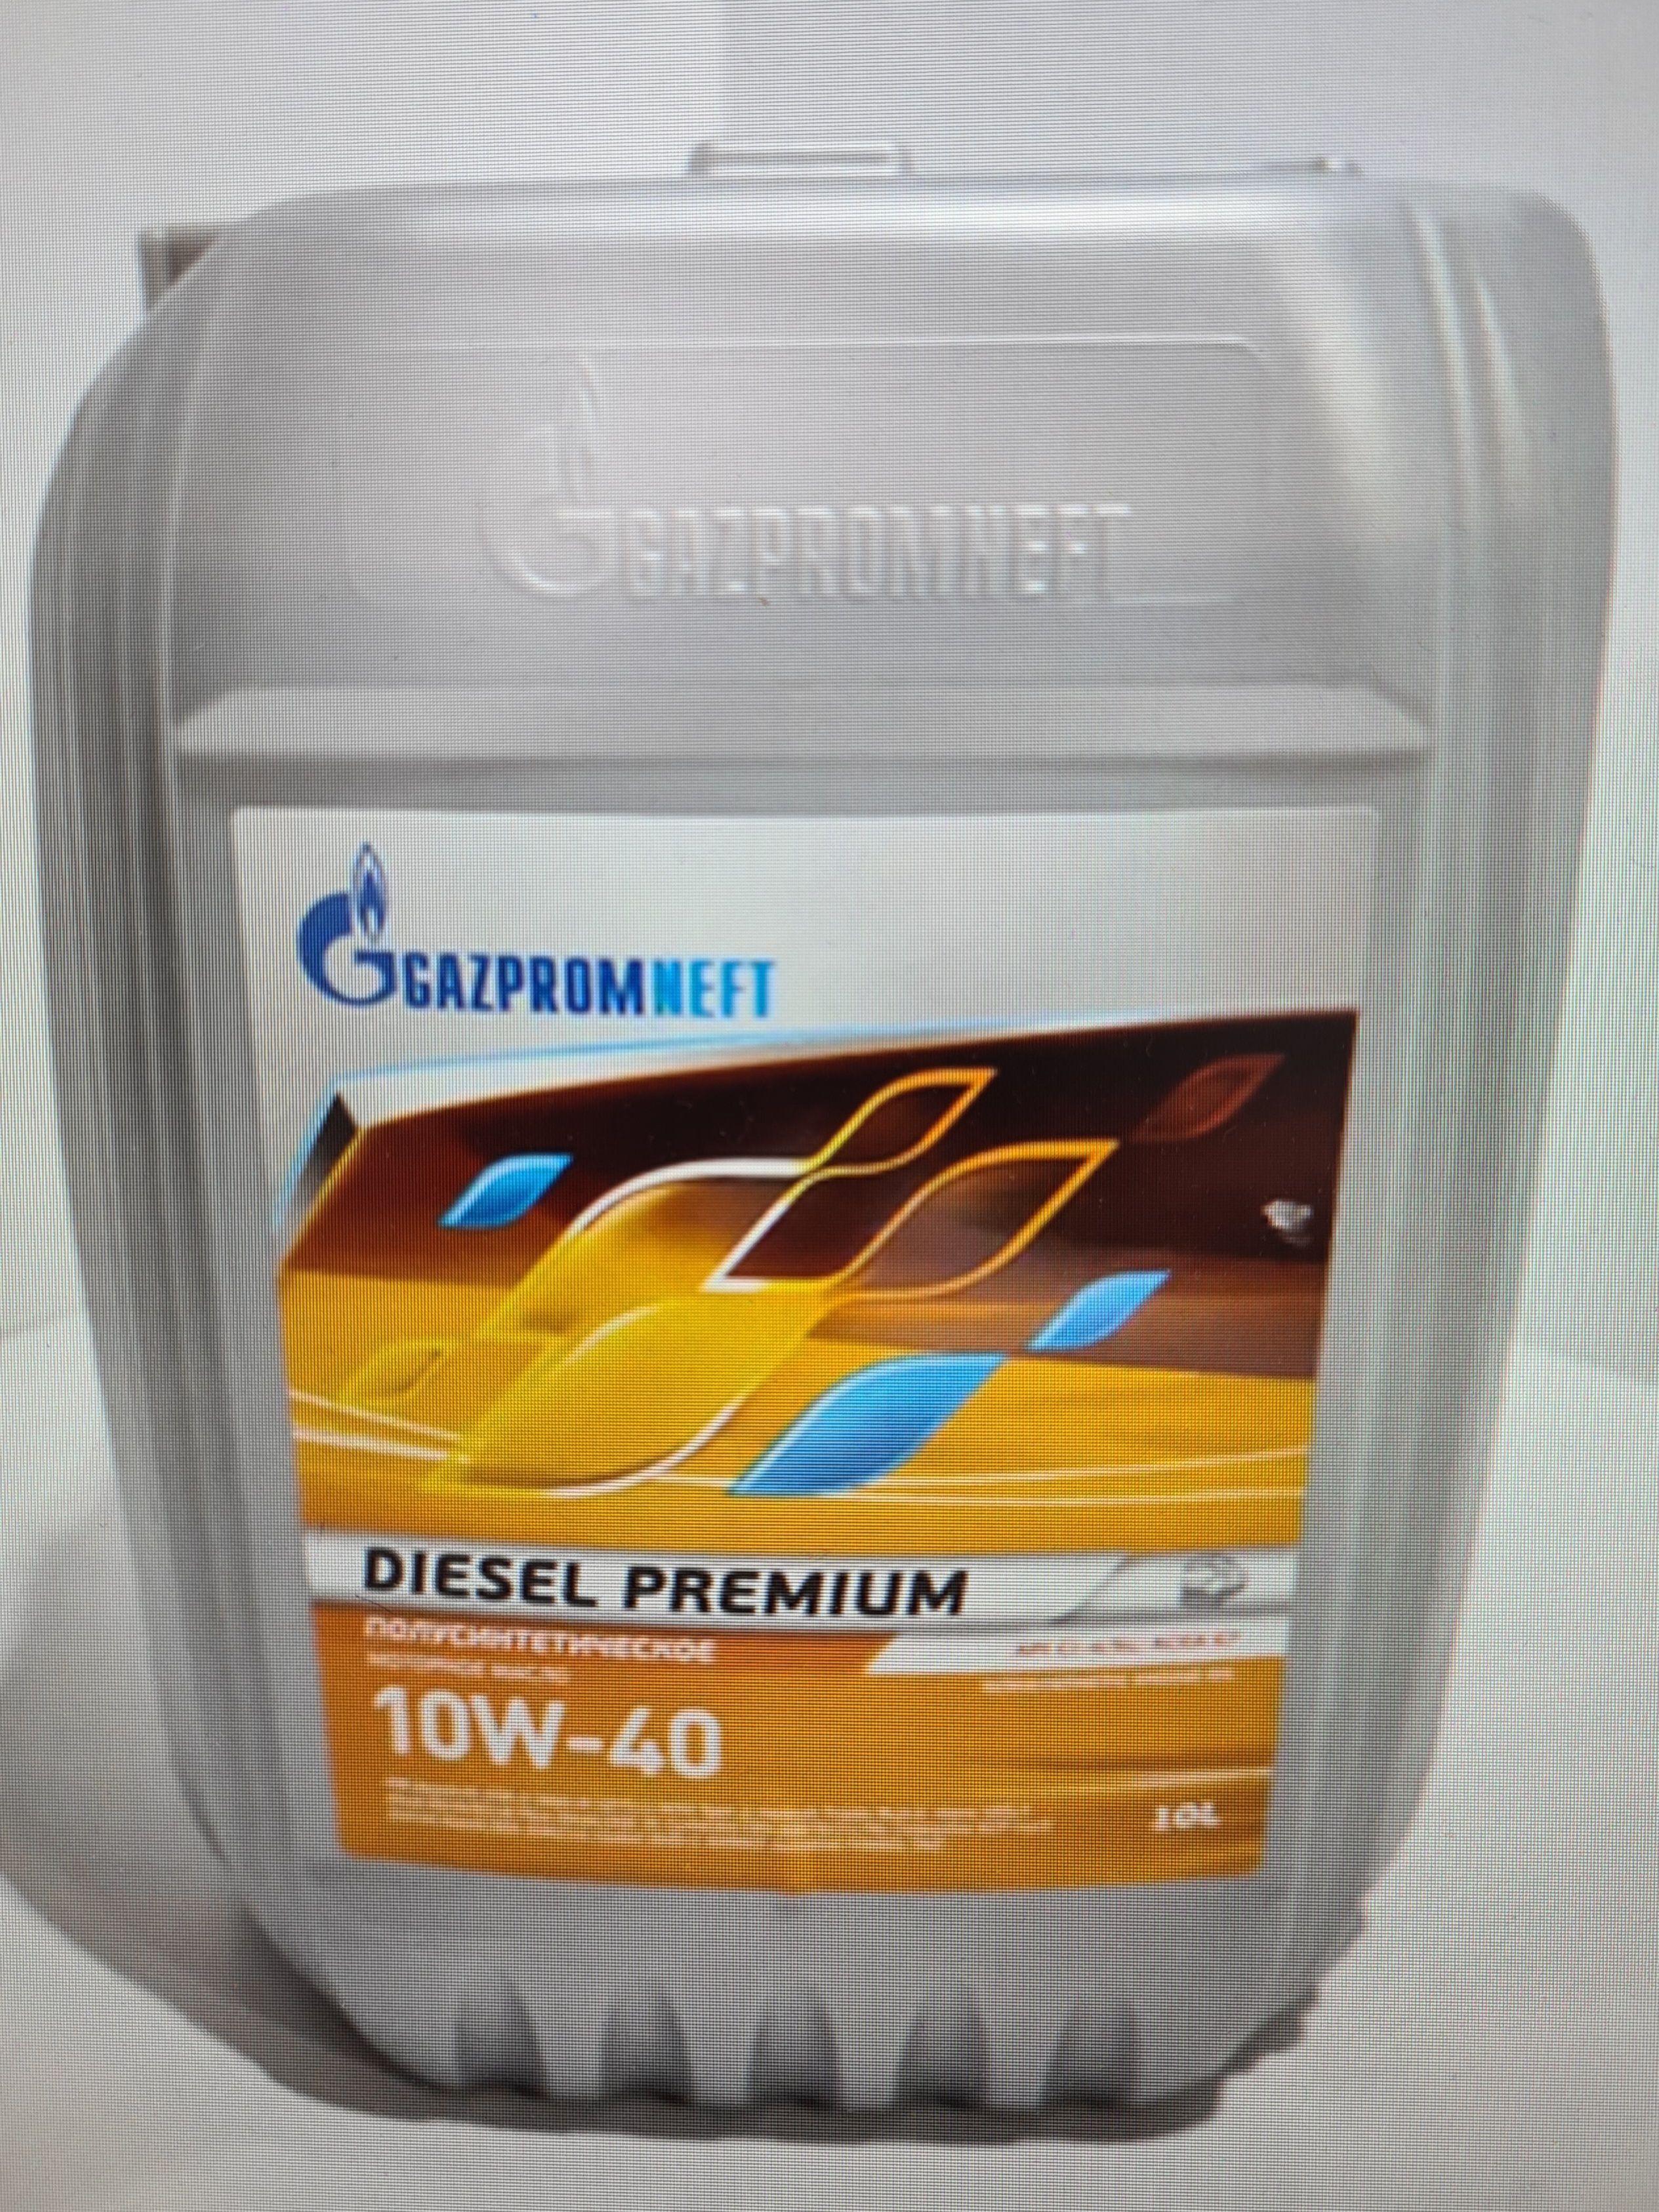 Gazpromneft diesel 10w 40. Масло моторное Газпромнефть дизель премиум 10w 40. Diesel Premium 10w-40 CL-4.